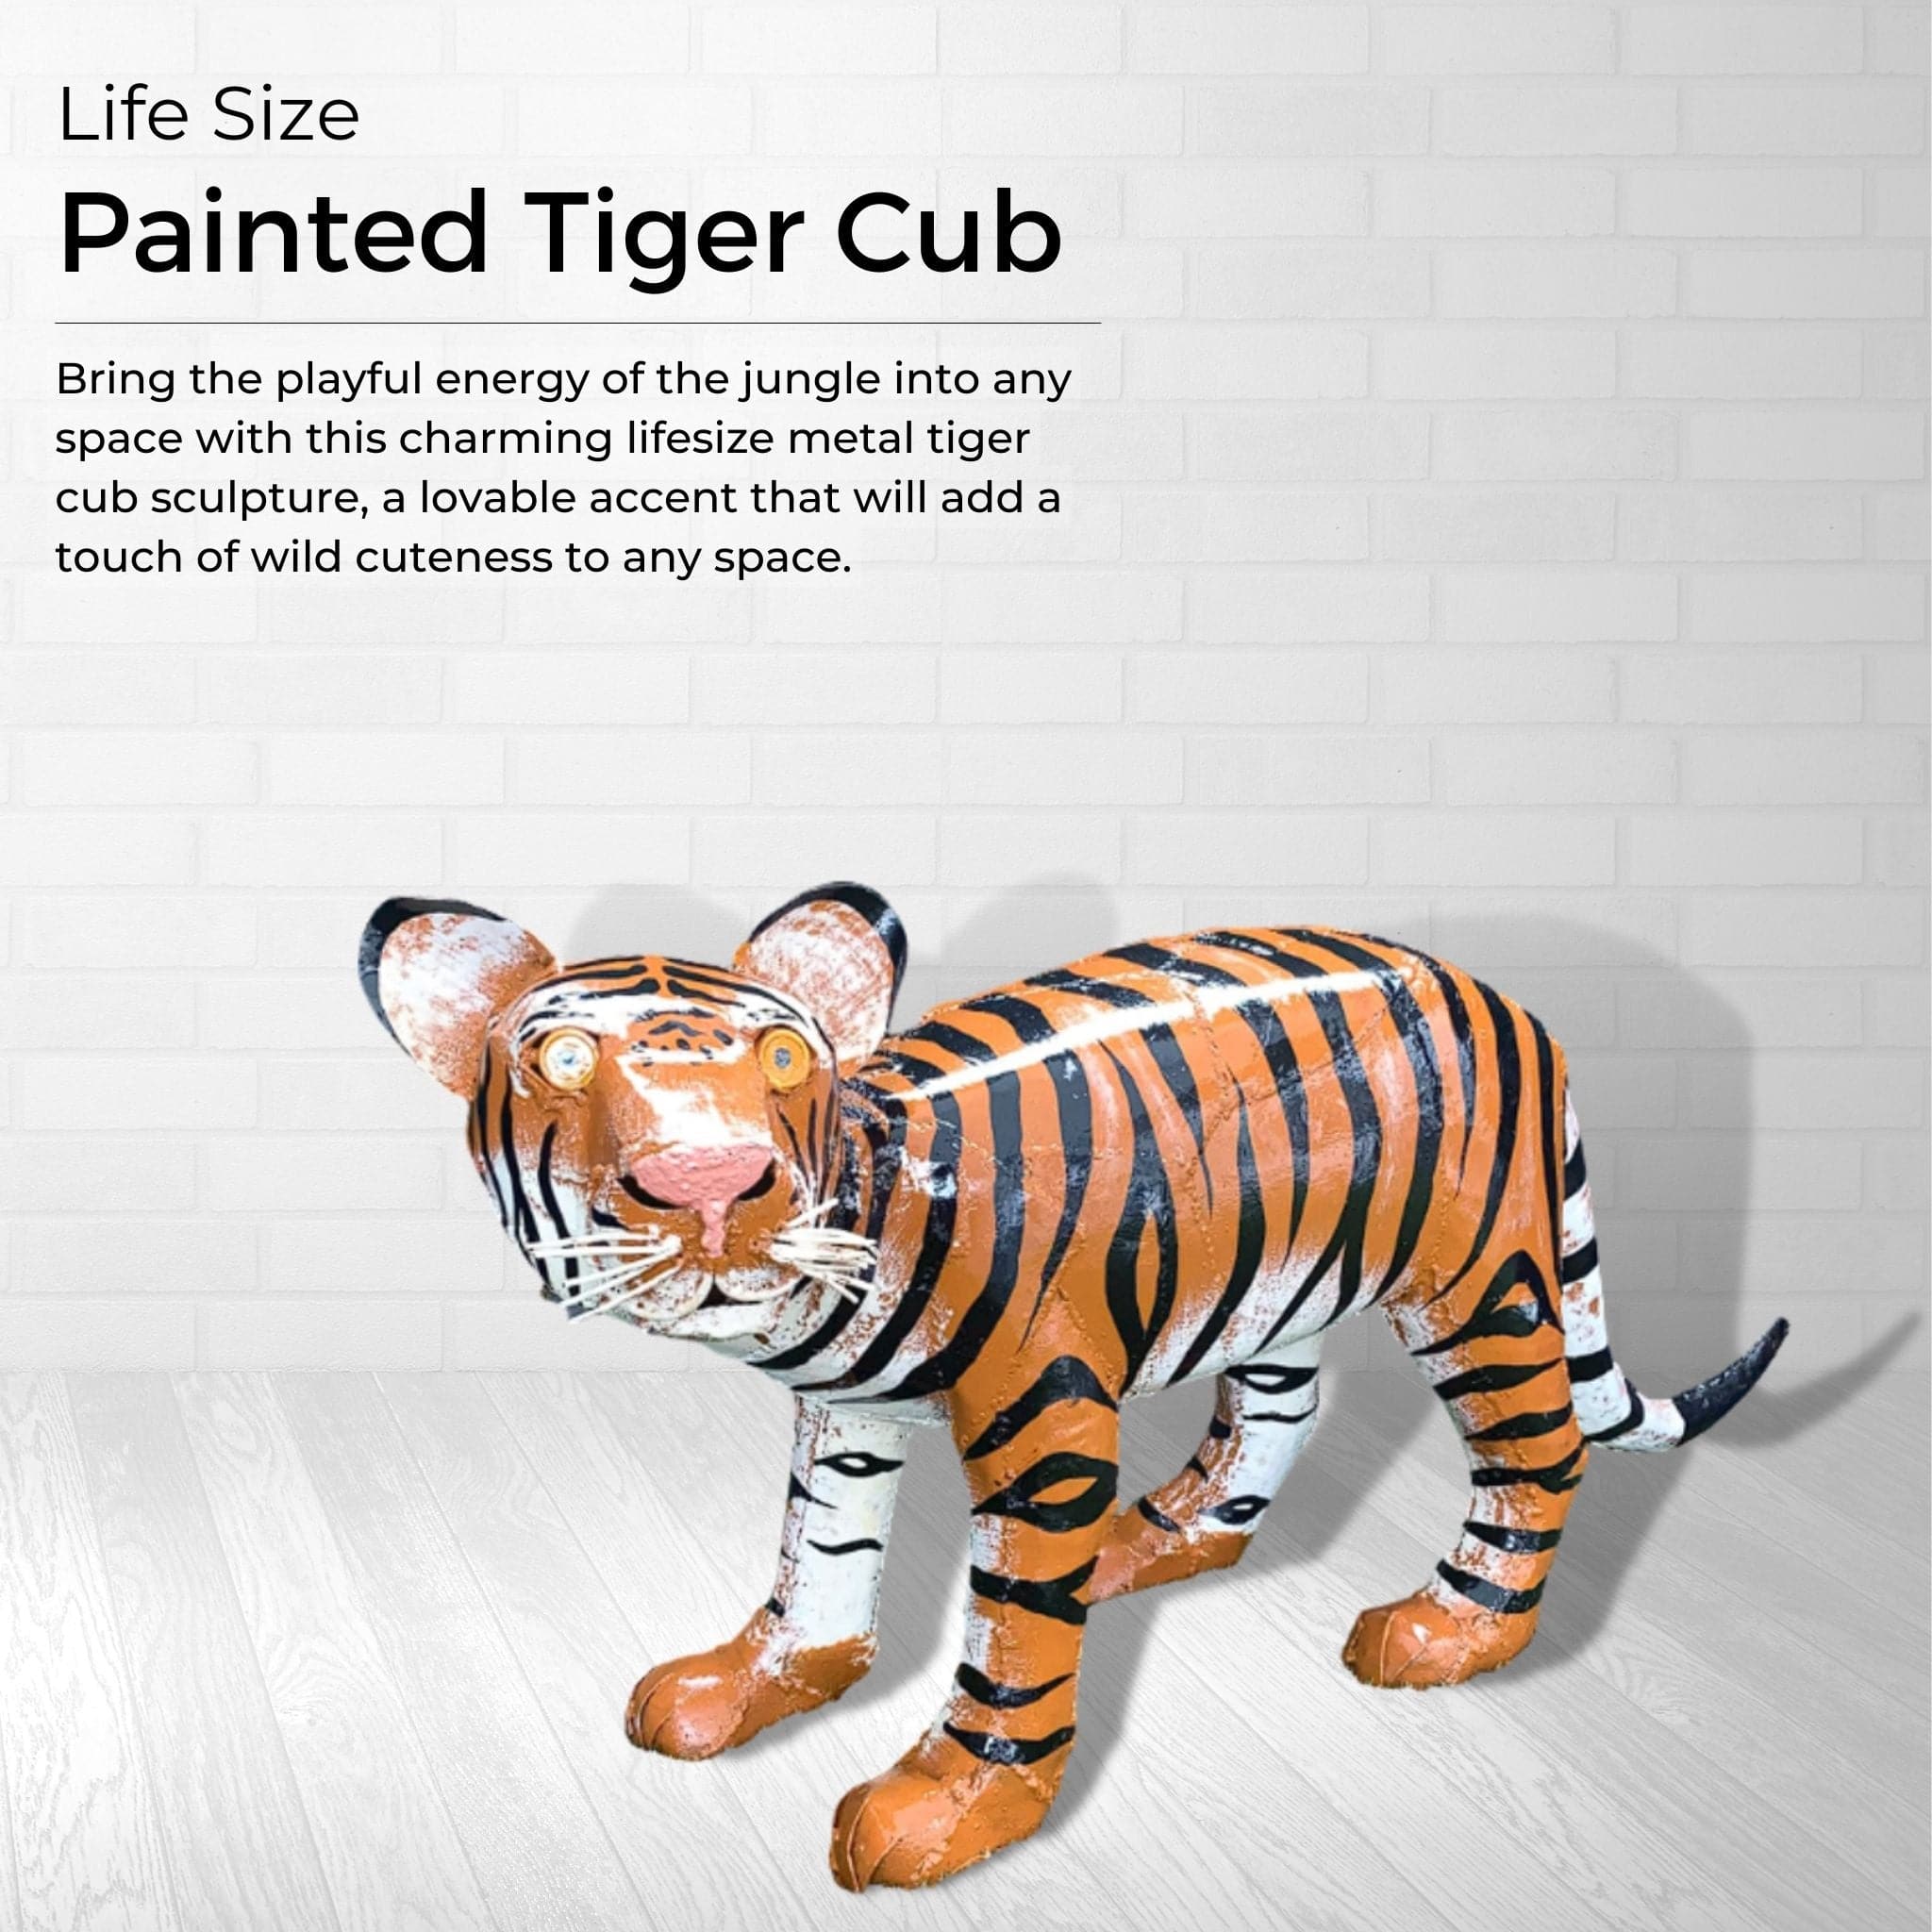 Painted Tiger Cub - Pangea Sculptures